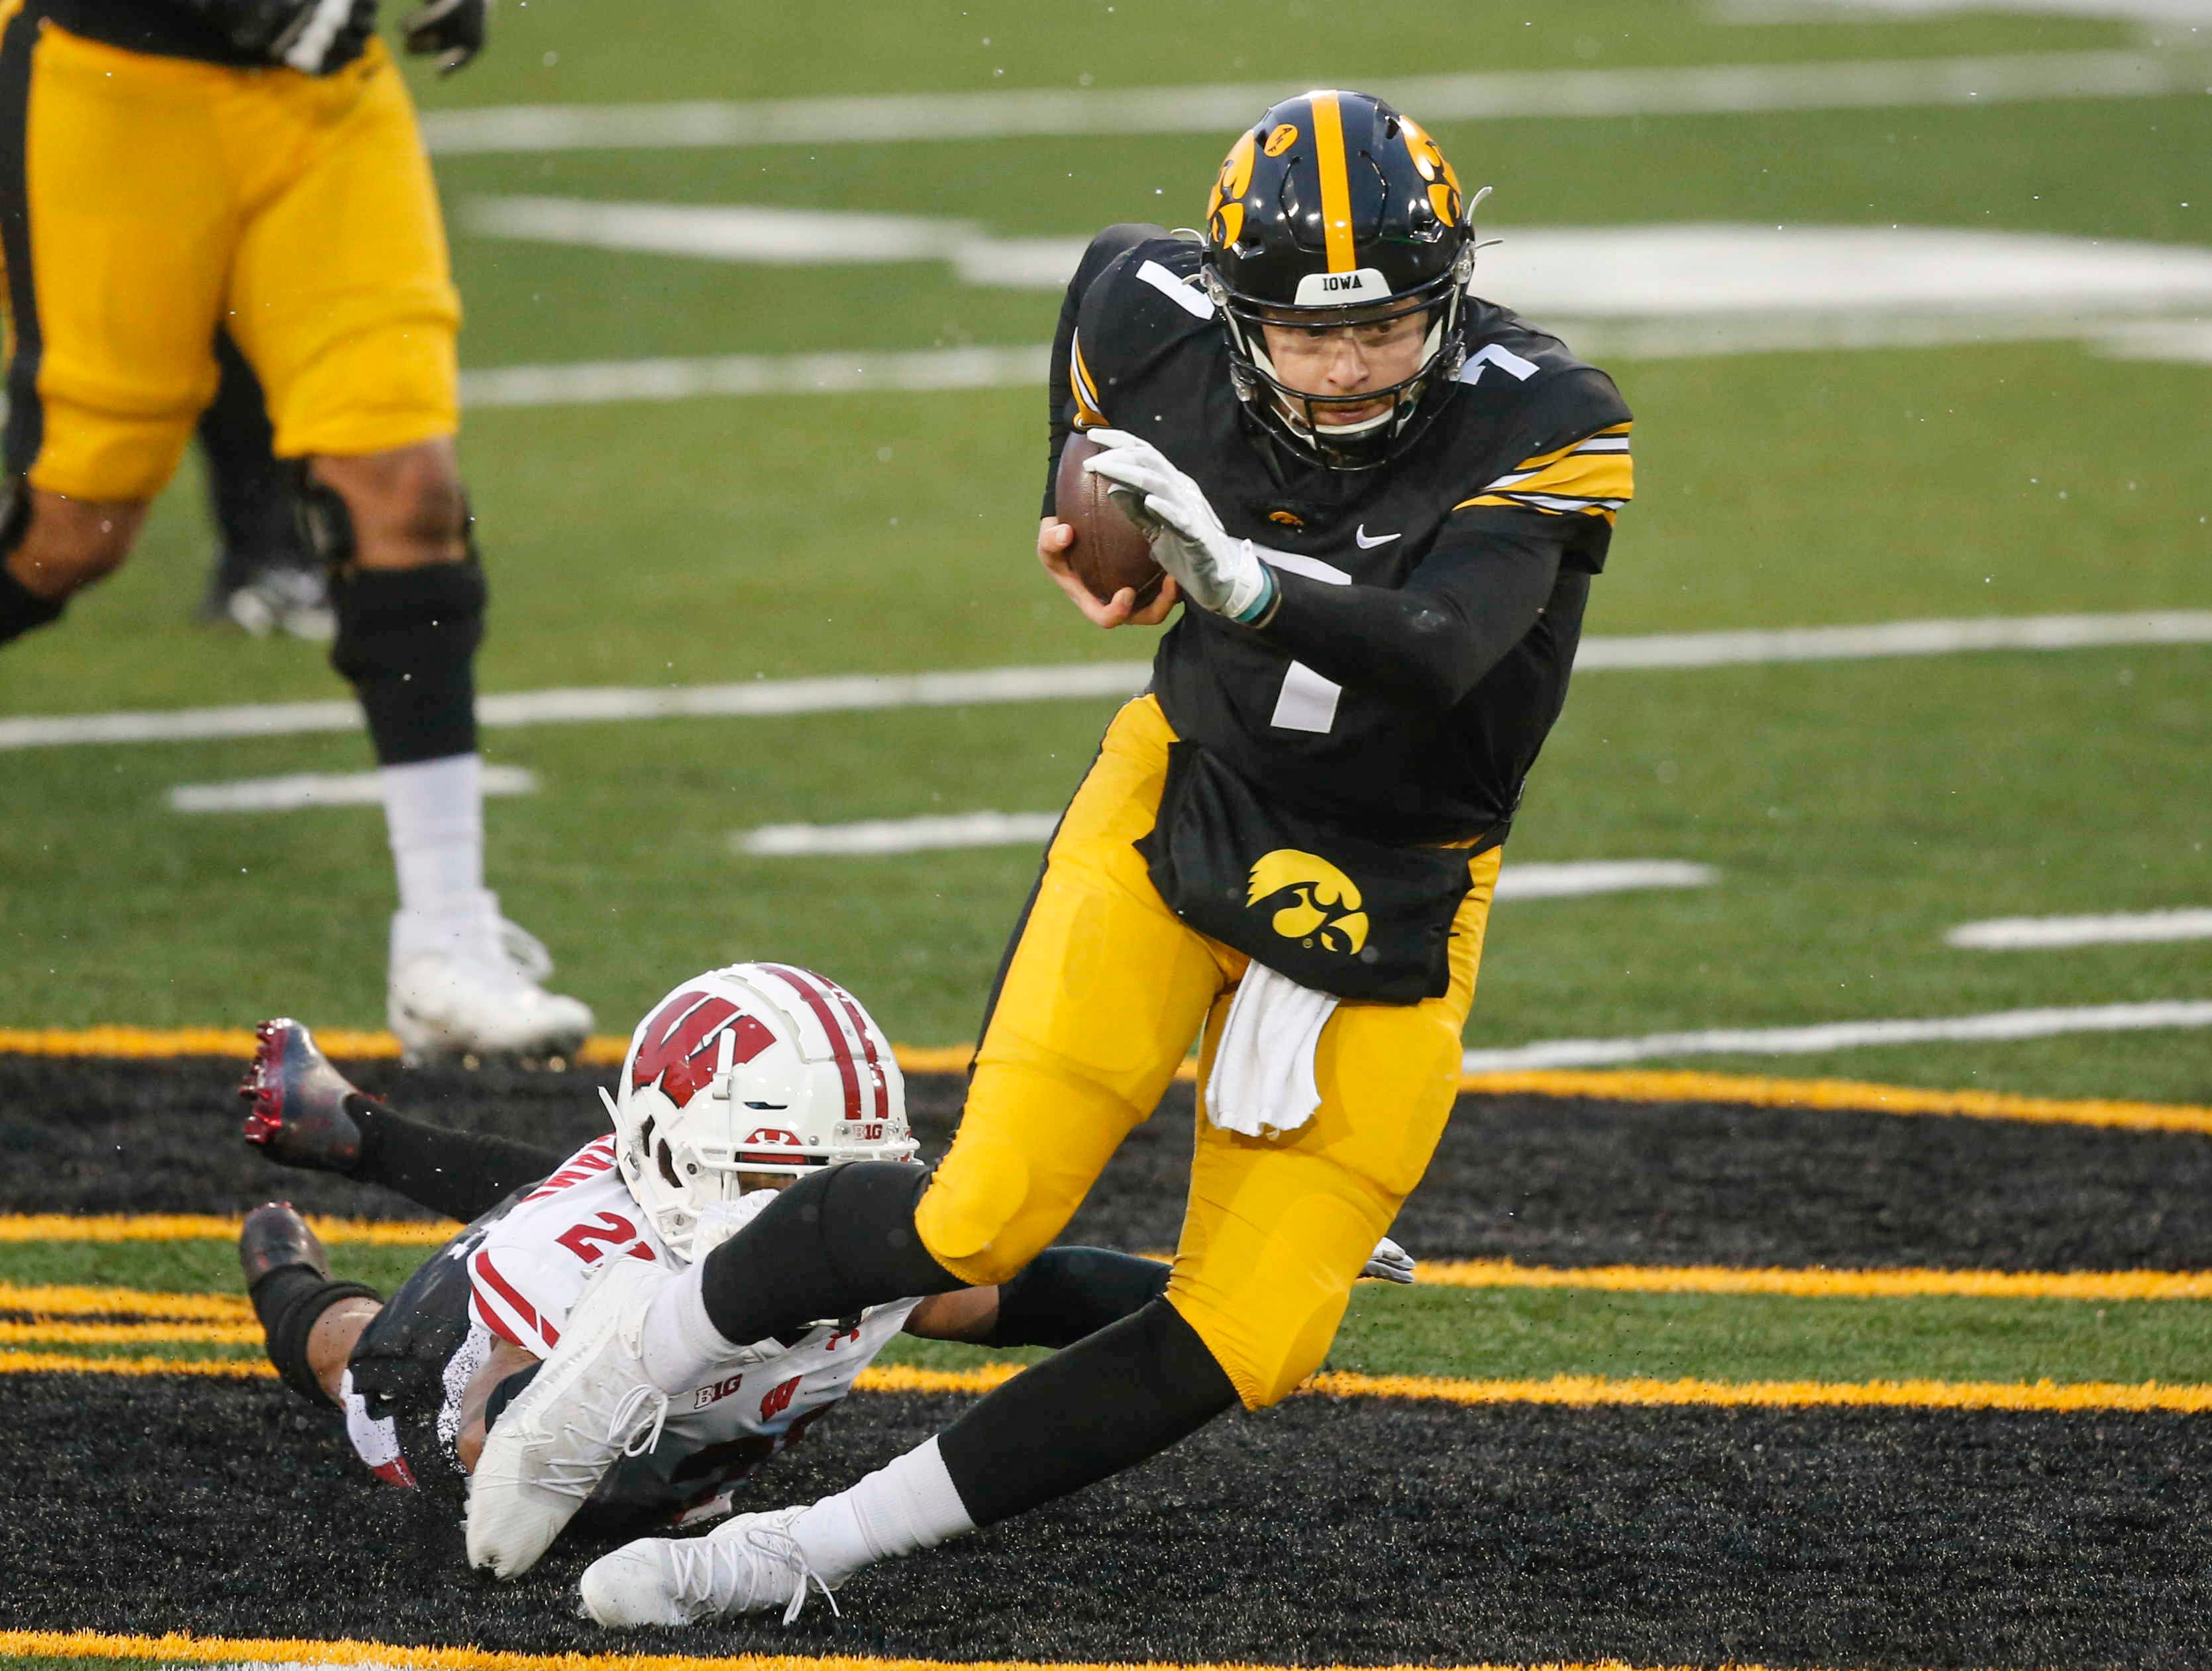 Iowa sophomore quarterback Spencer Petras scrambles for yards against Wisconsin in the second quarter on Saturday, Dec. 12, 2020, at Kinnick Stadium in Iowa City, Iowa.